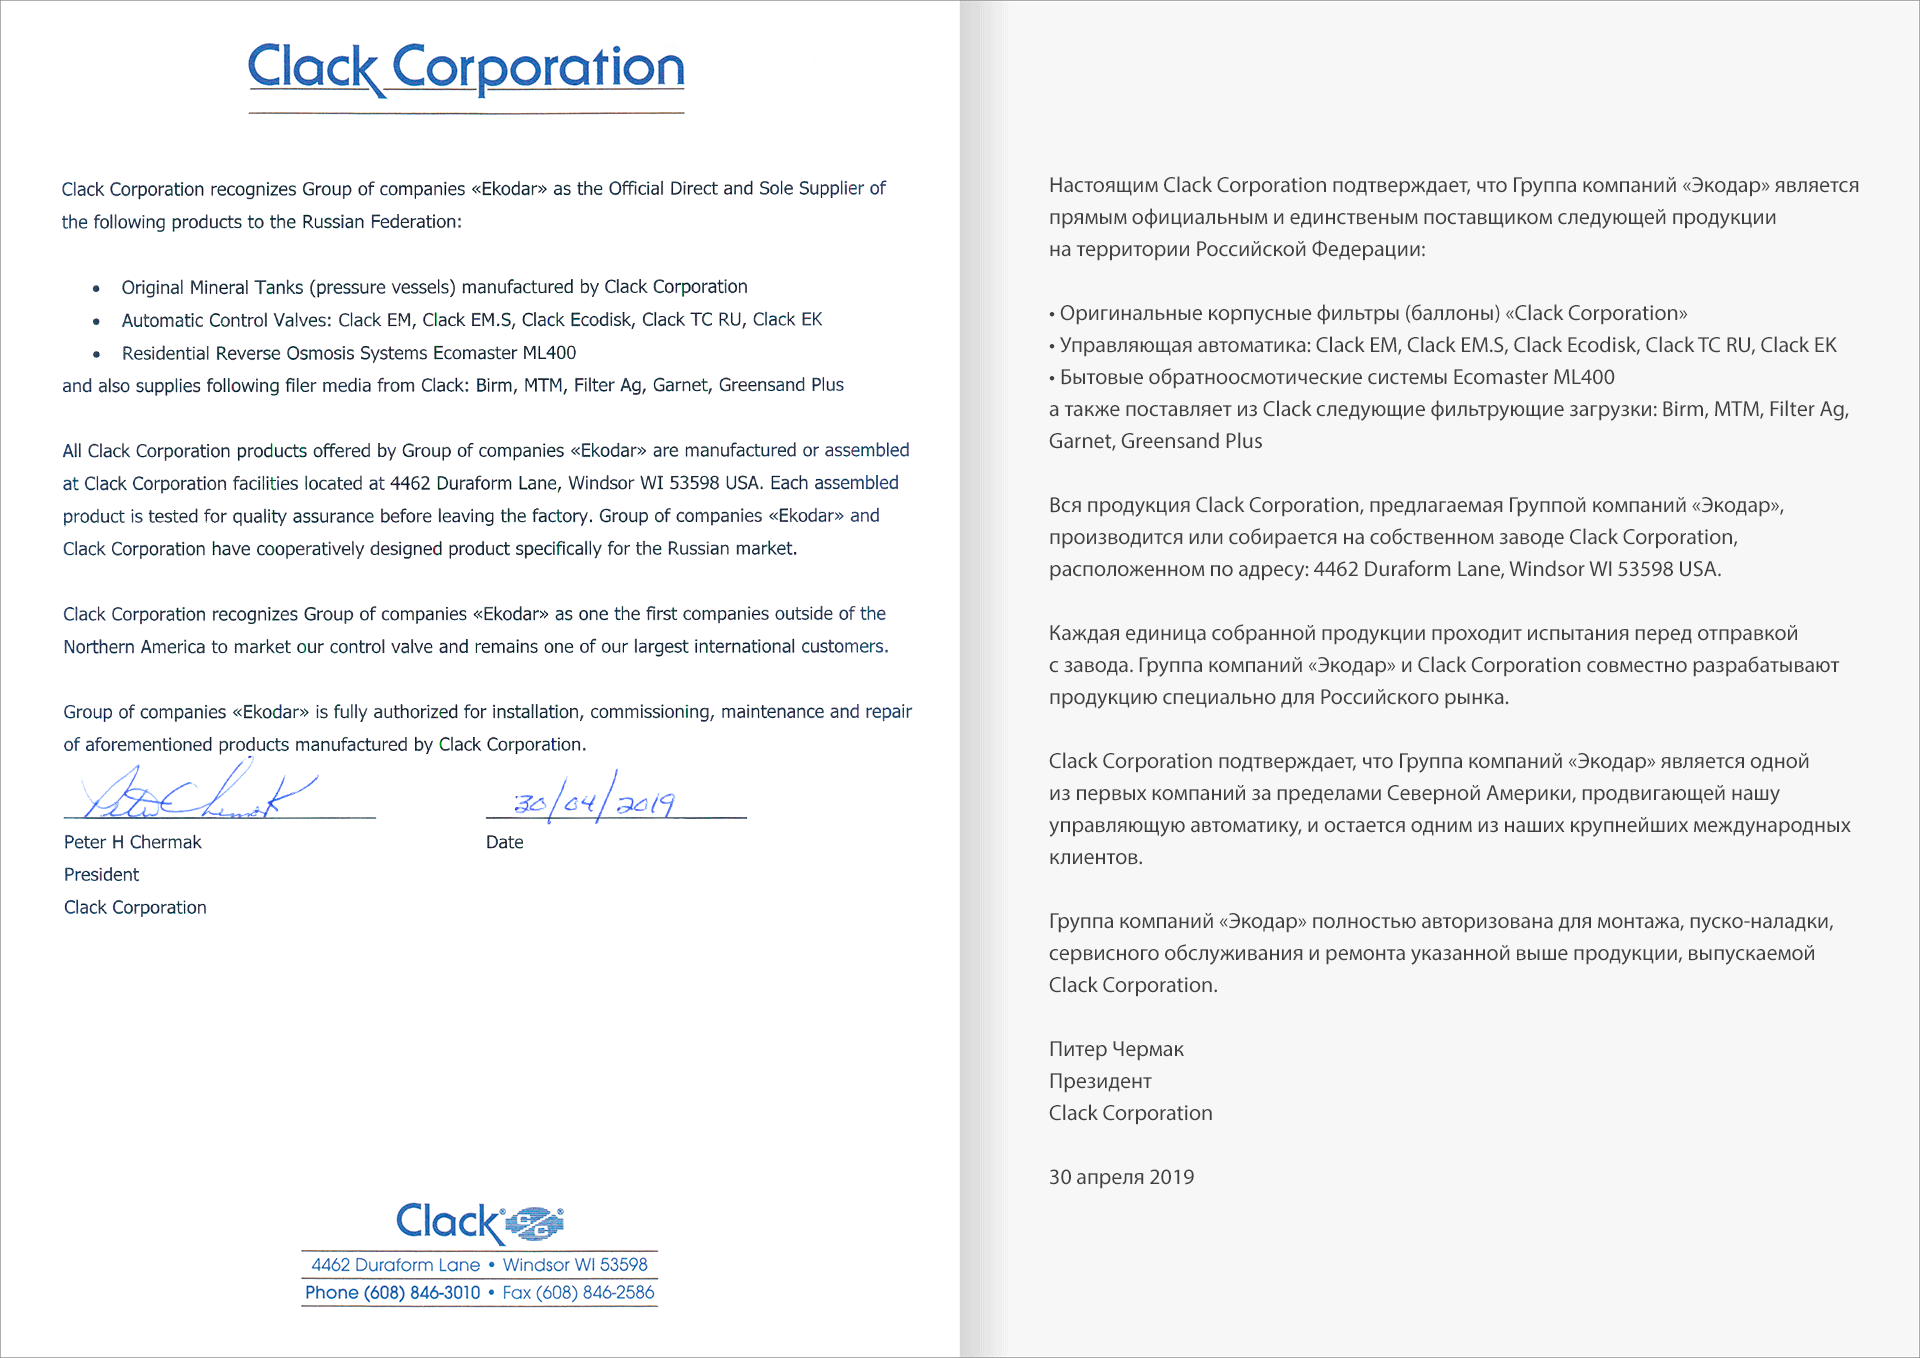 Лицензия Clack corporation